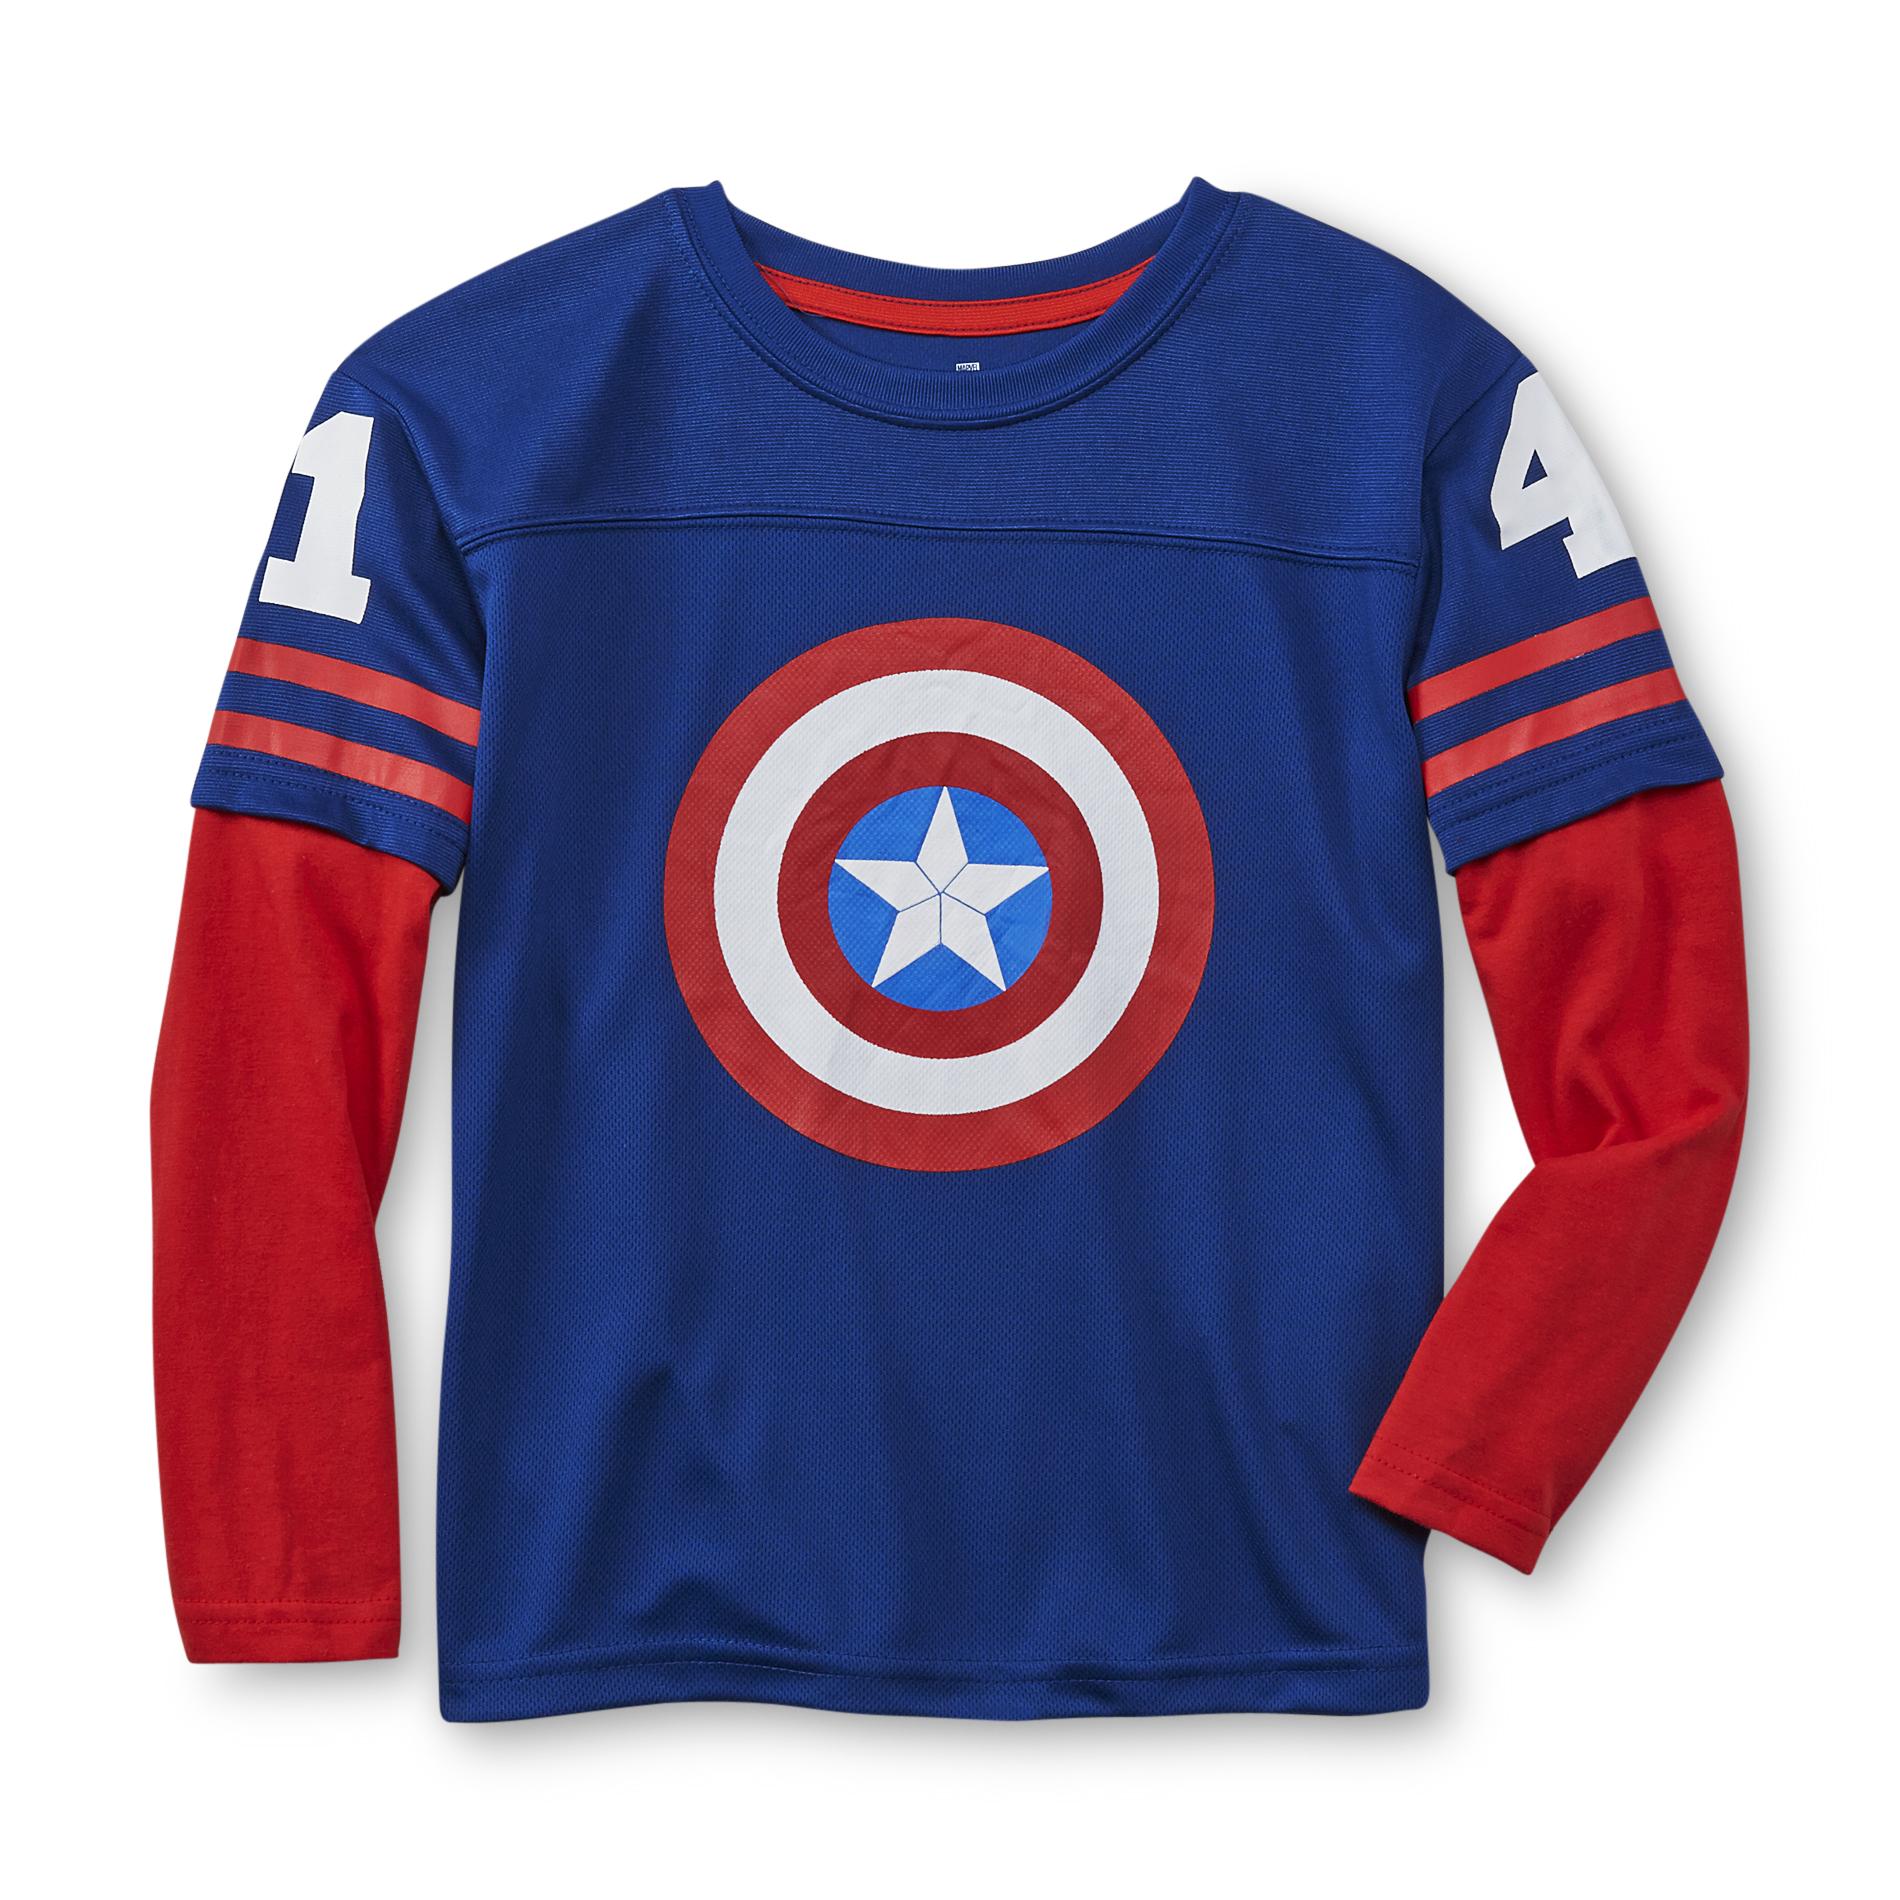 Marvel Captain America Boy's Layered Look Shirt